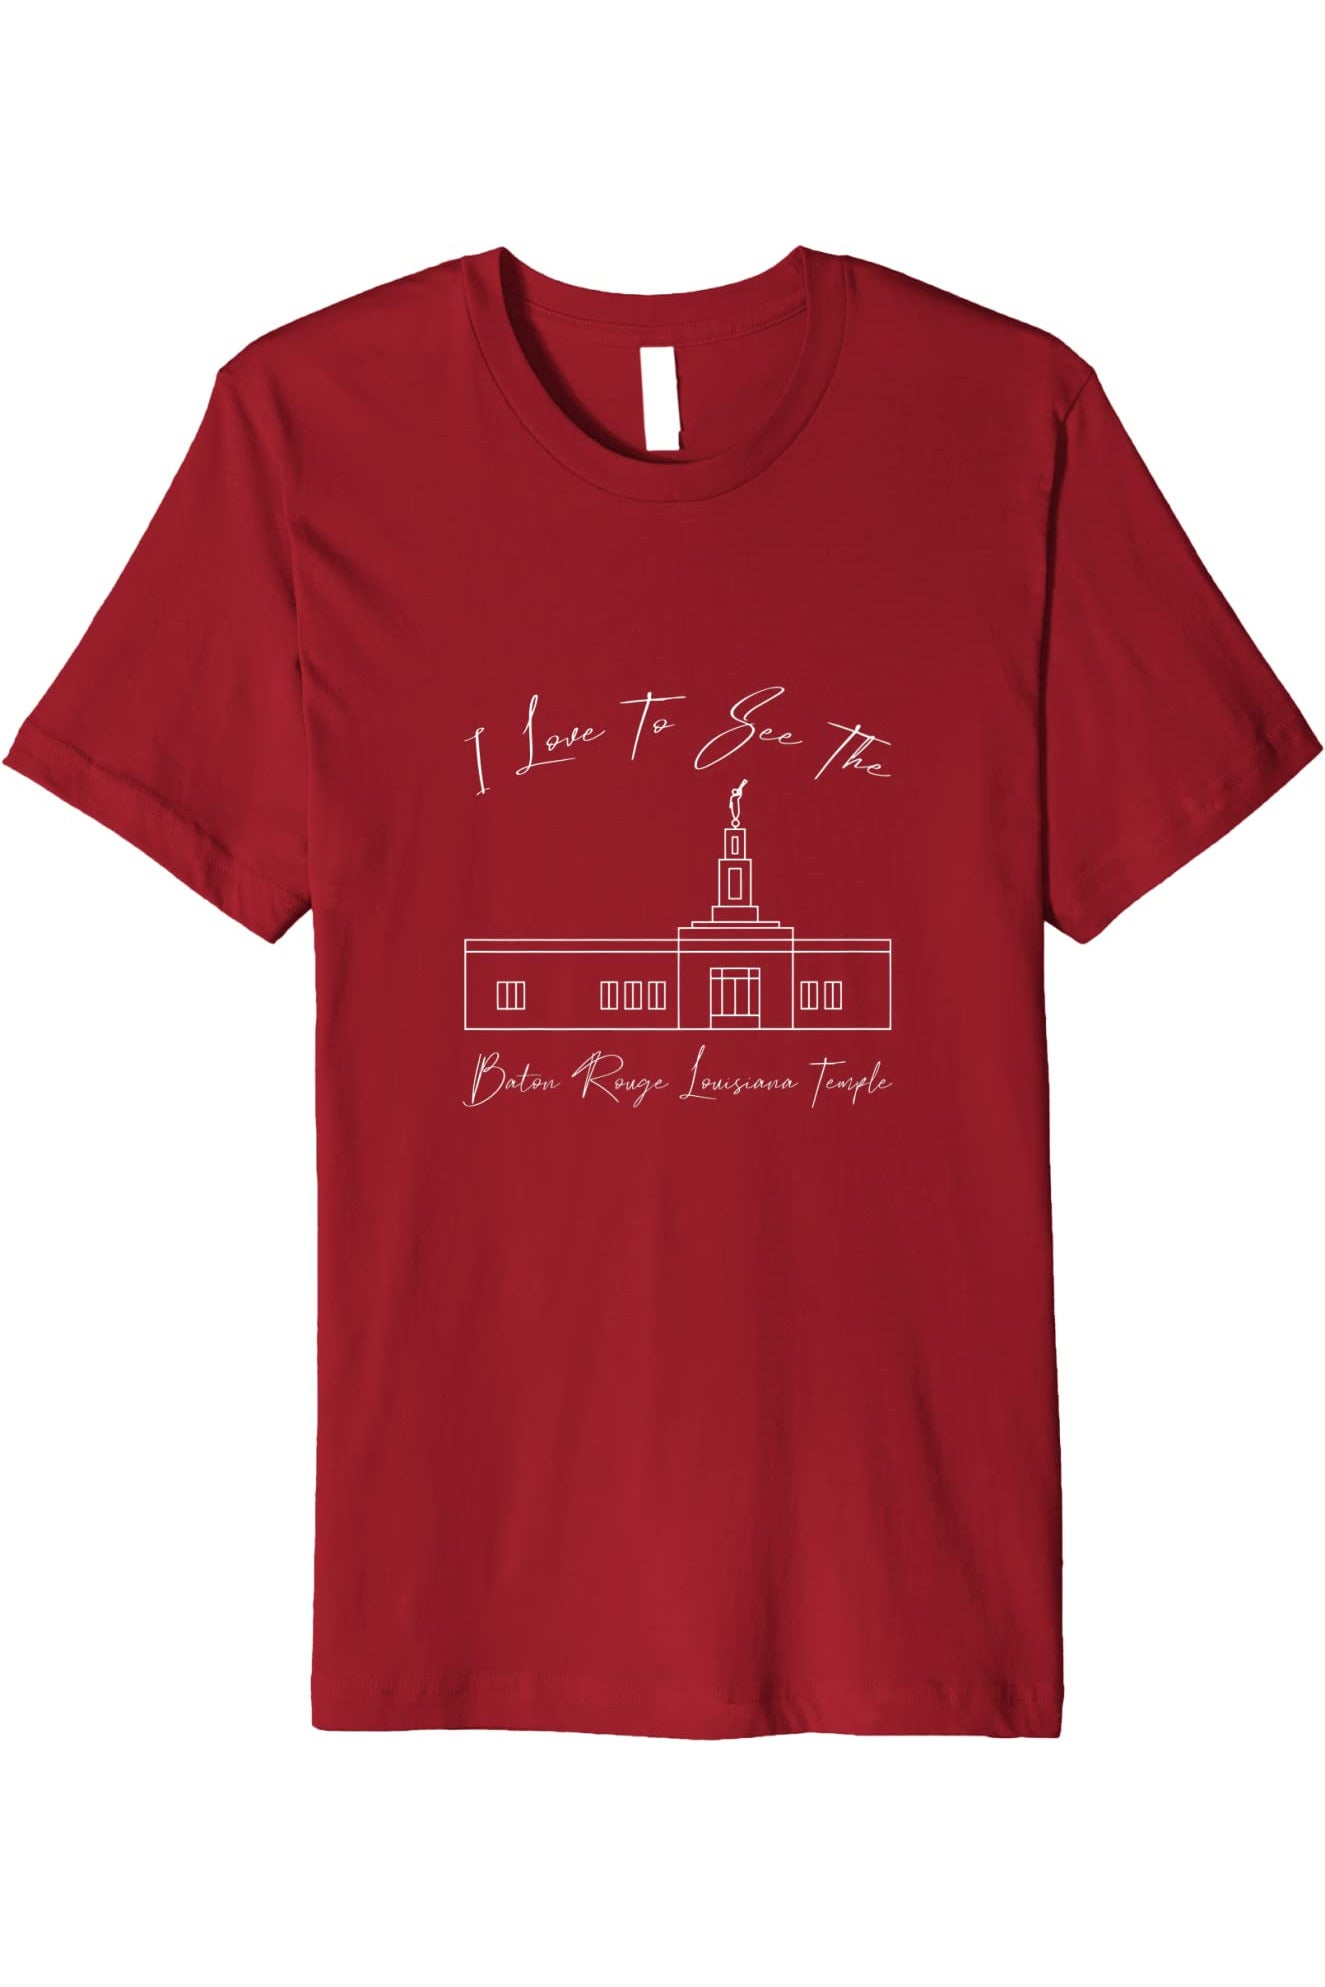 Baton Rouge Louisiana Temple T-Shirt - Premium - Calligraphy Style (English) US